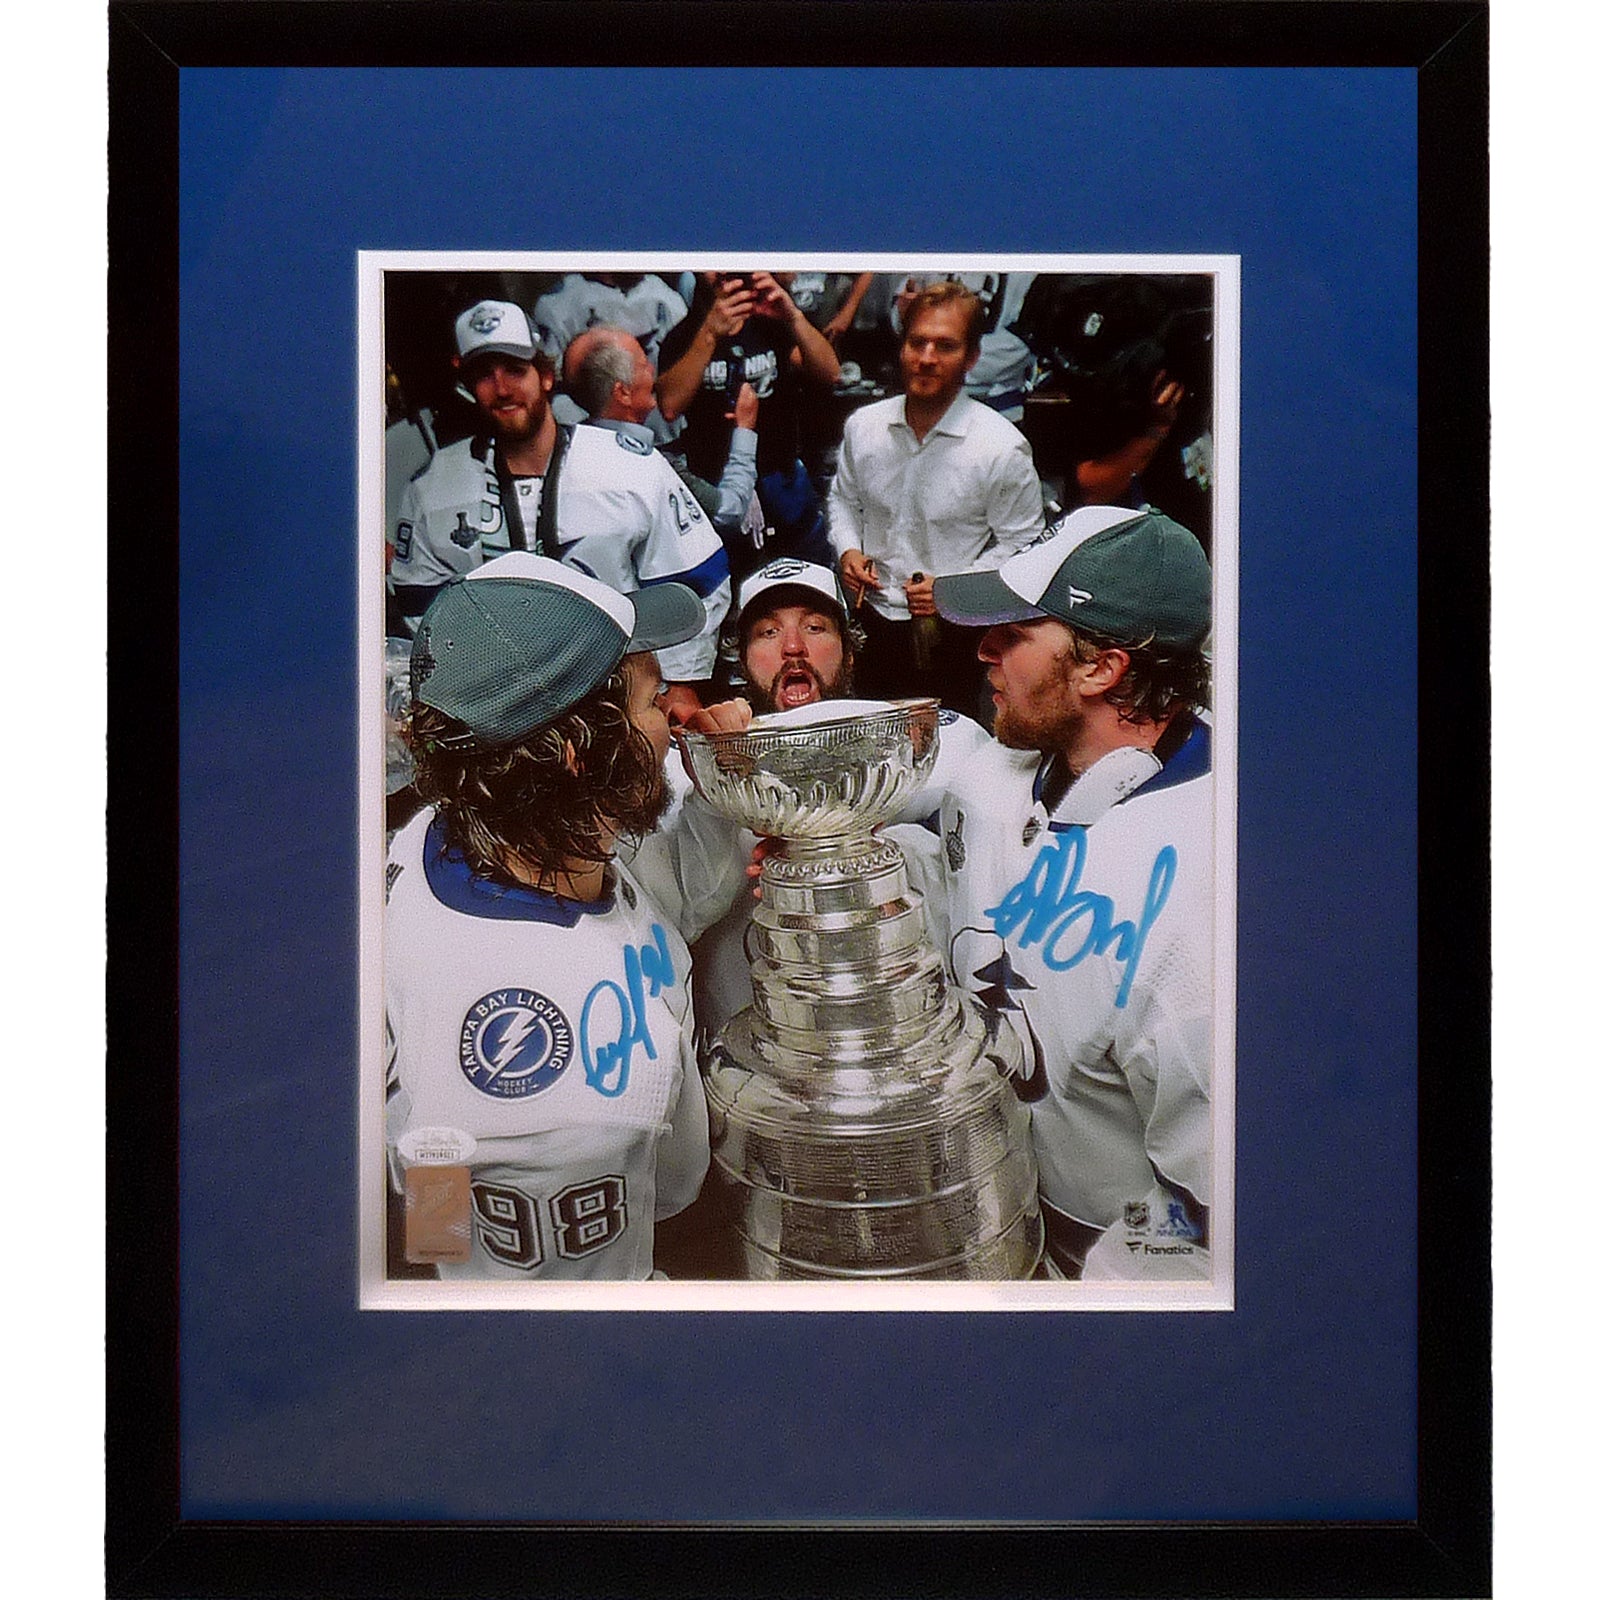 Mikhail Sergachev And Andrei Vasilevskiy Autographed Tampa Bay Lightning (Stanley Cup Trophy) Deluxe Framed 11x14 Photos - JSA